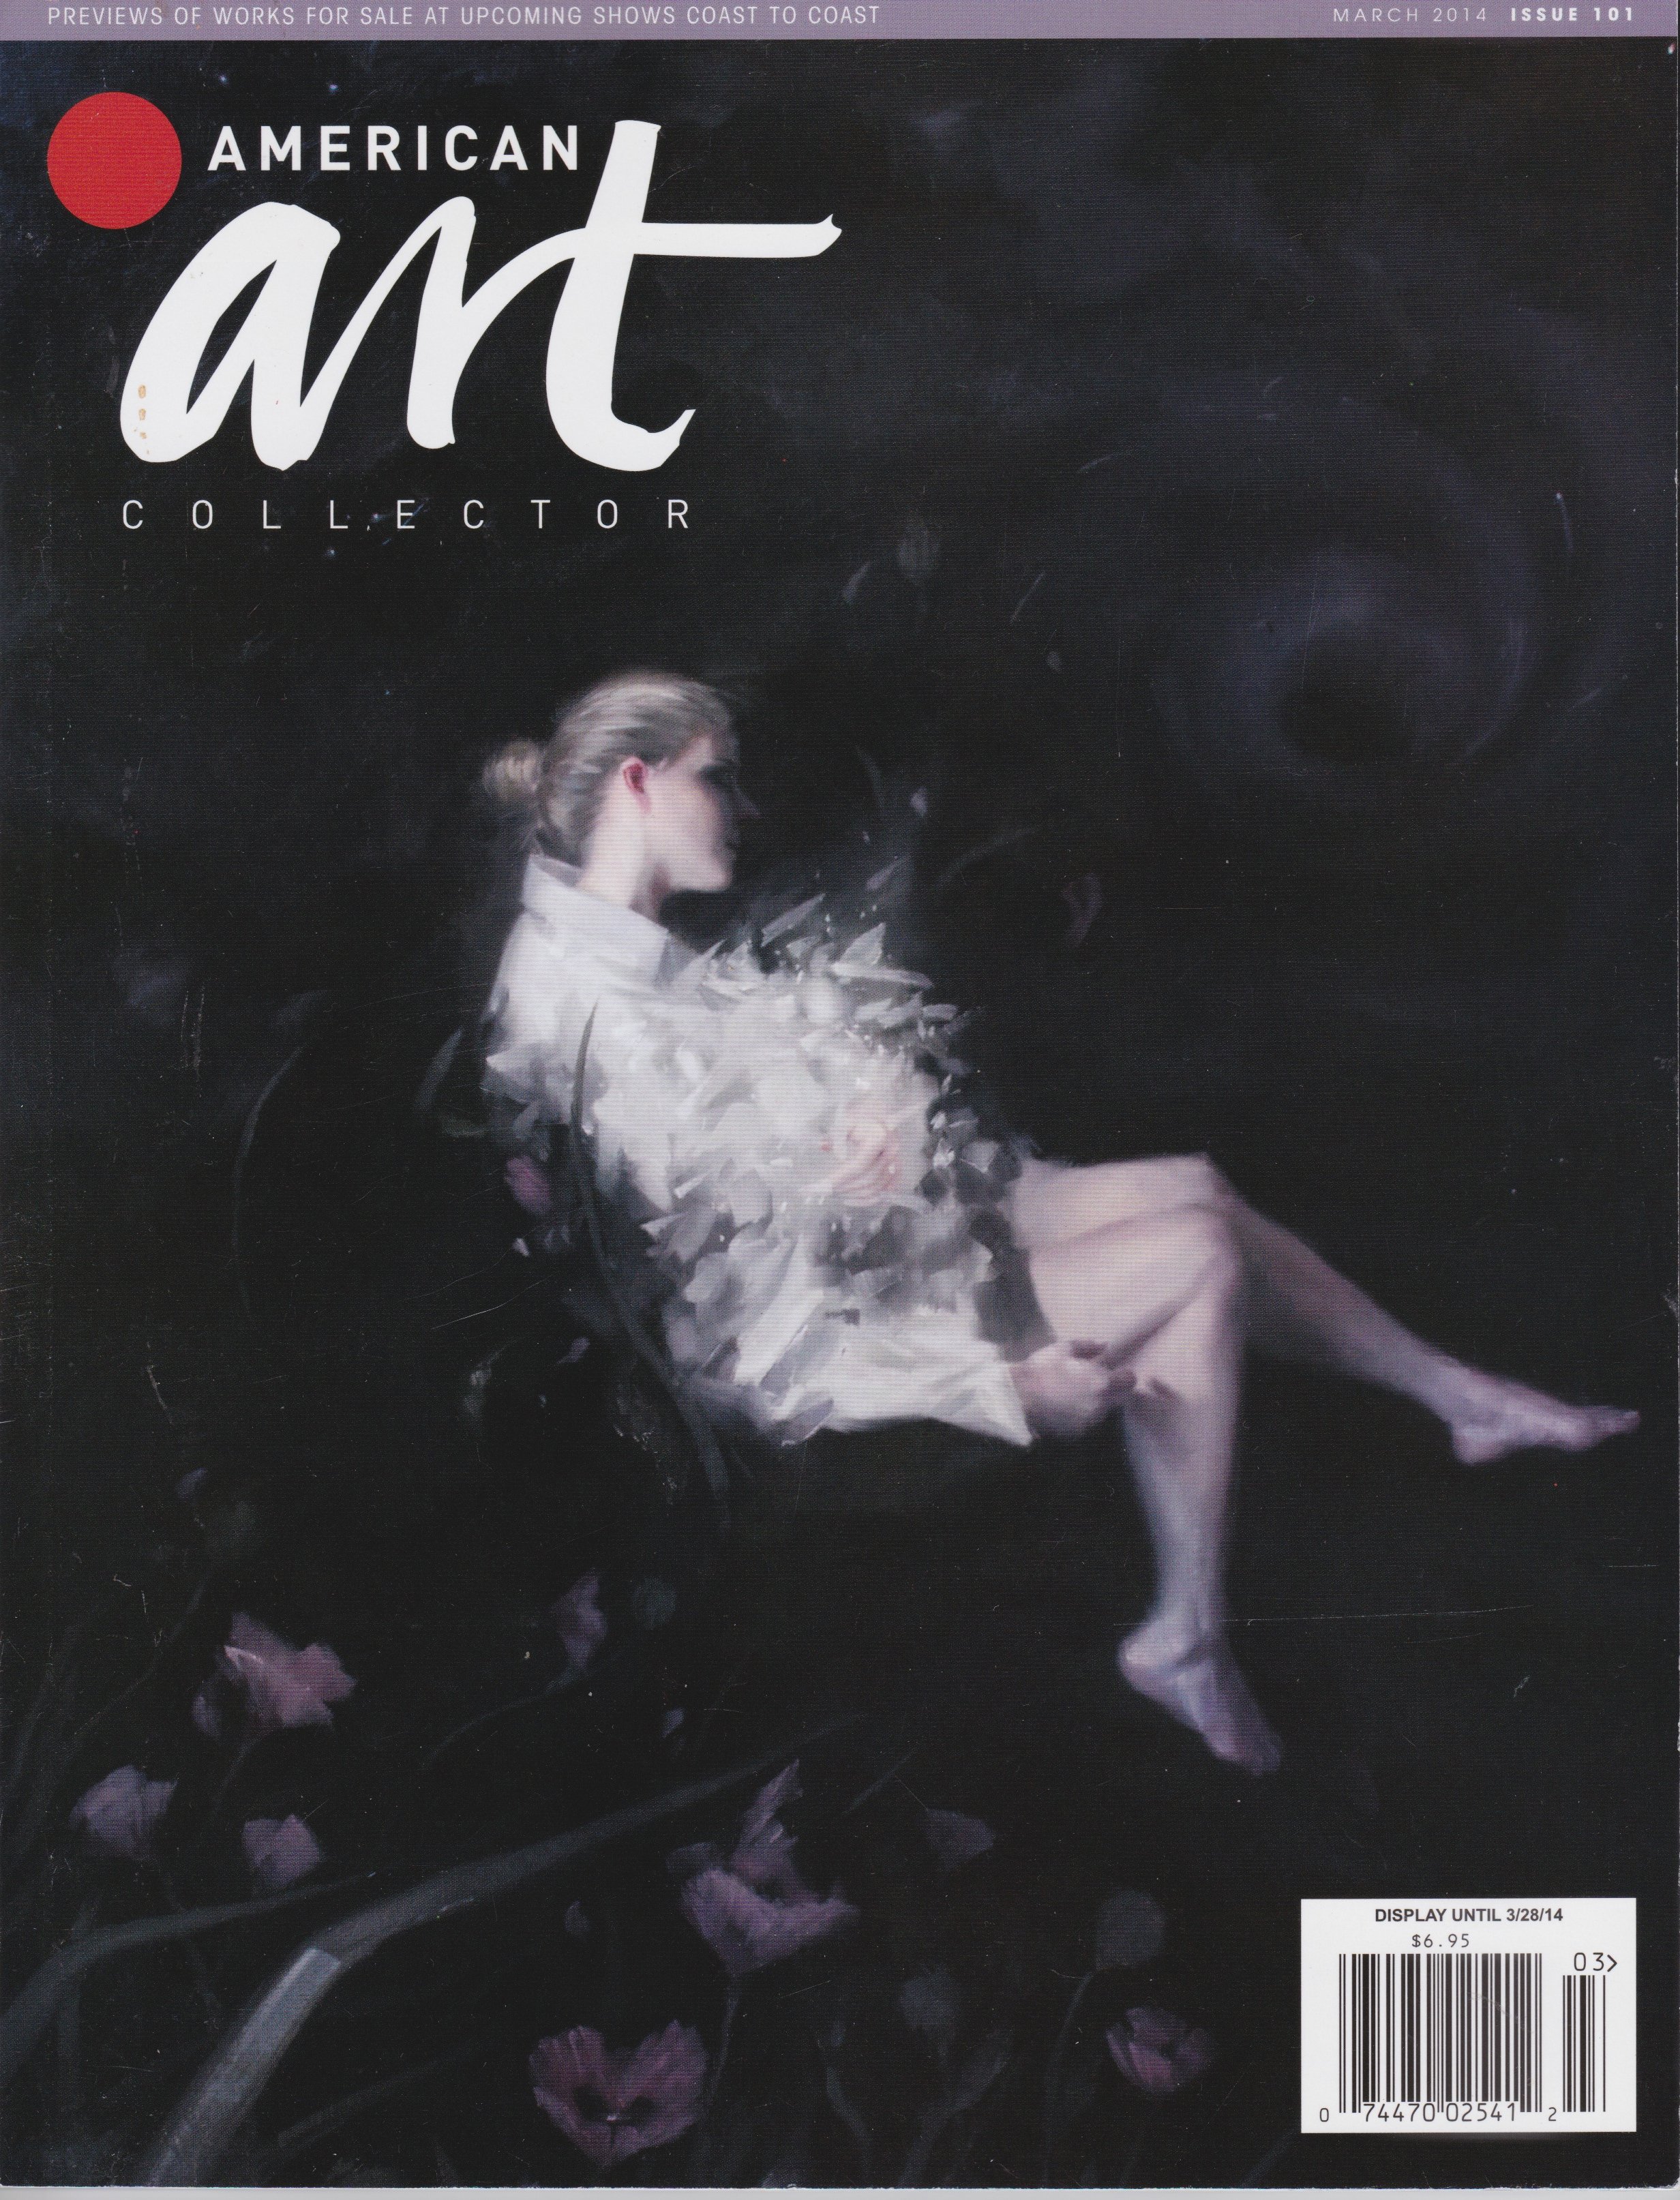 American Art Collector magazine cover